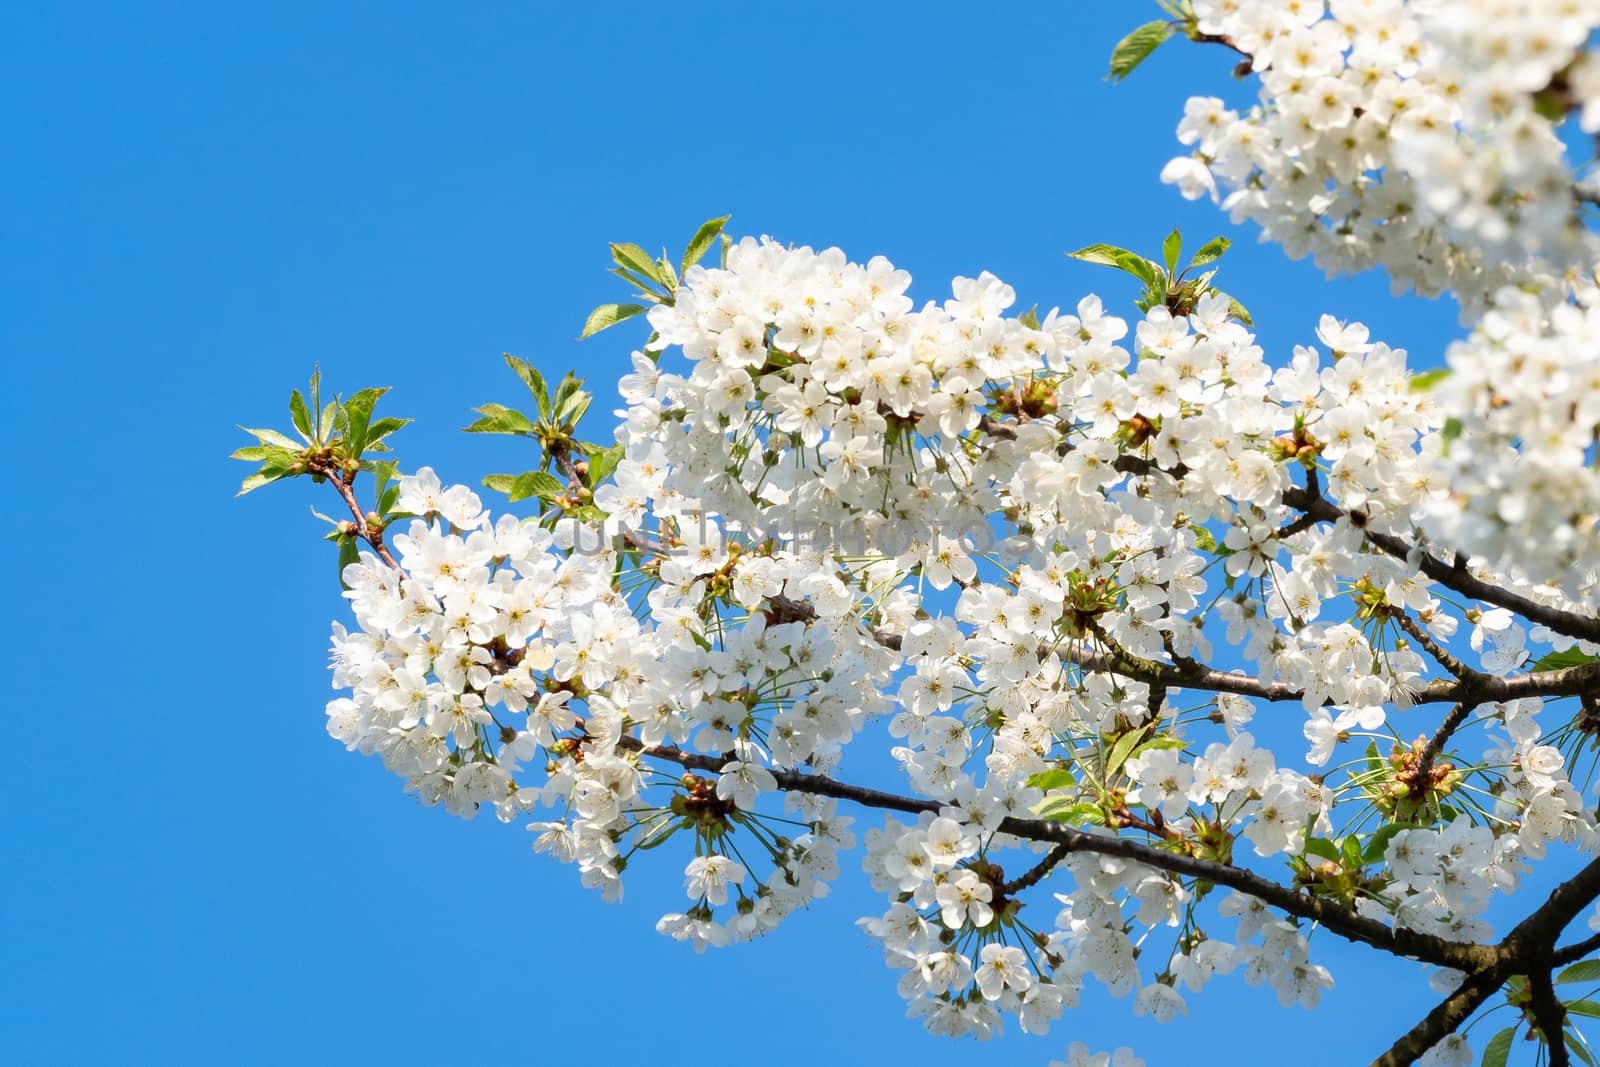 Spring blossom cherry tree flowers and blue sky